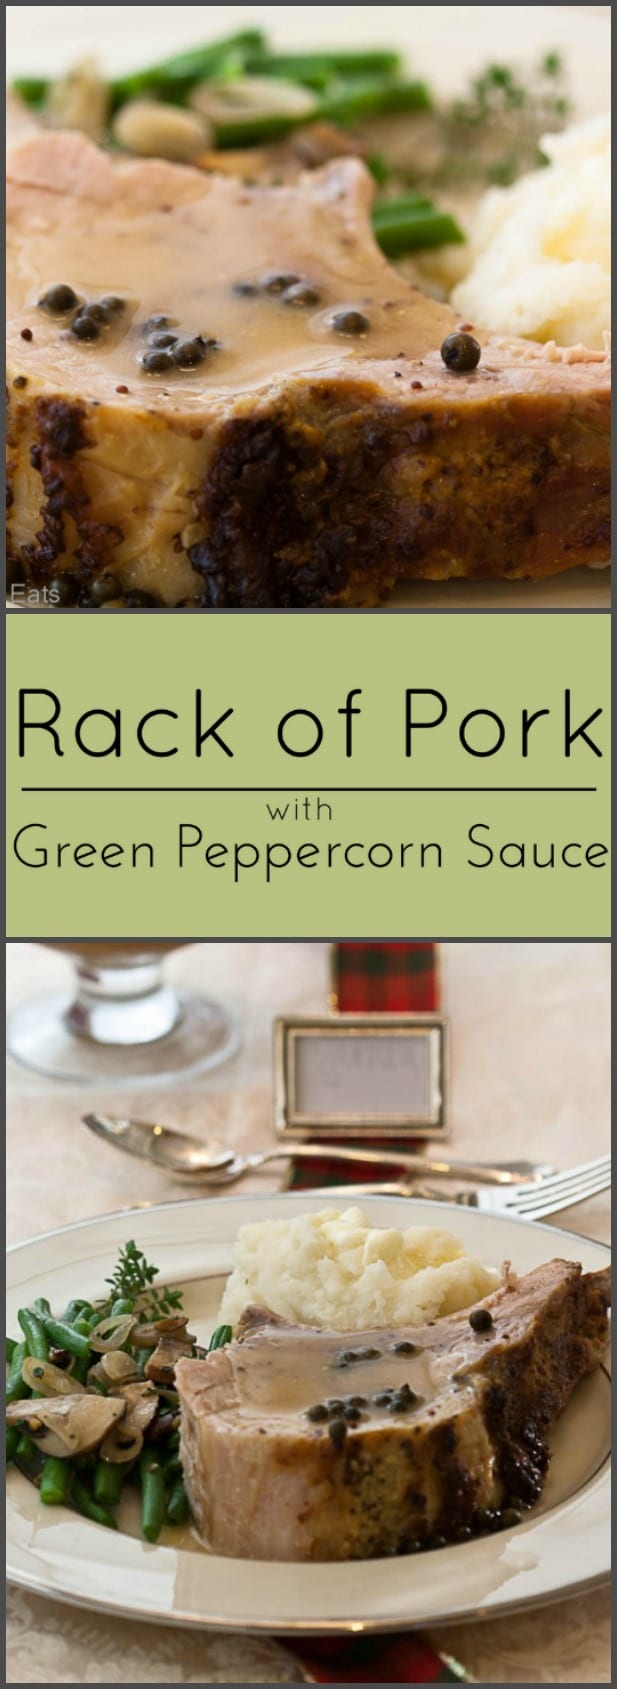 Rack of pork with green peppercorn sauce - image for Pinterest. 